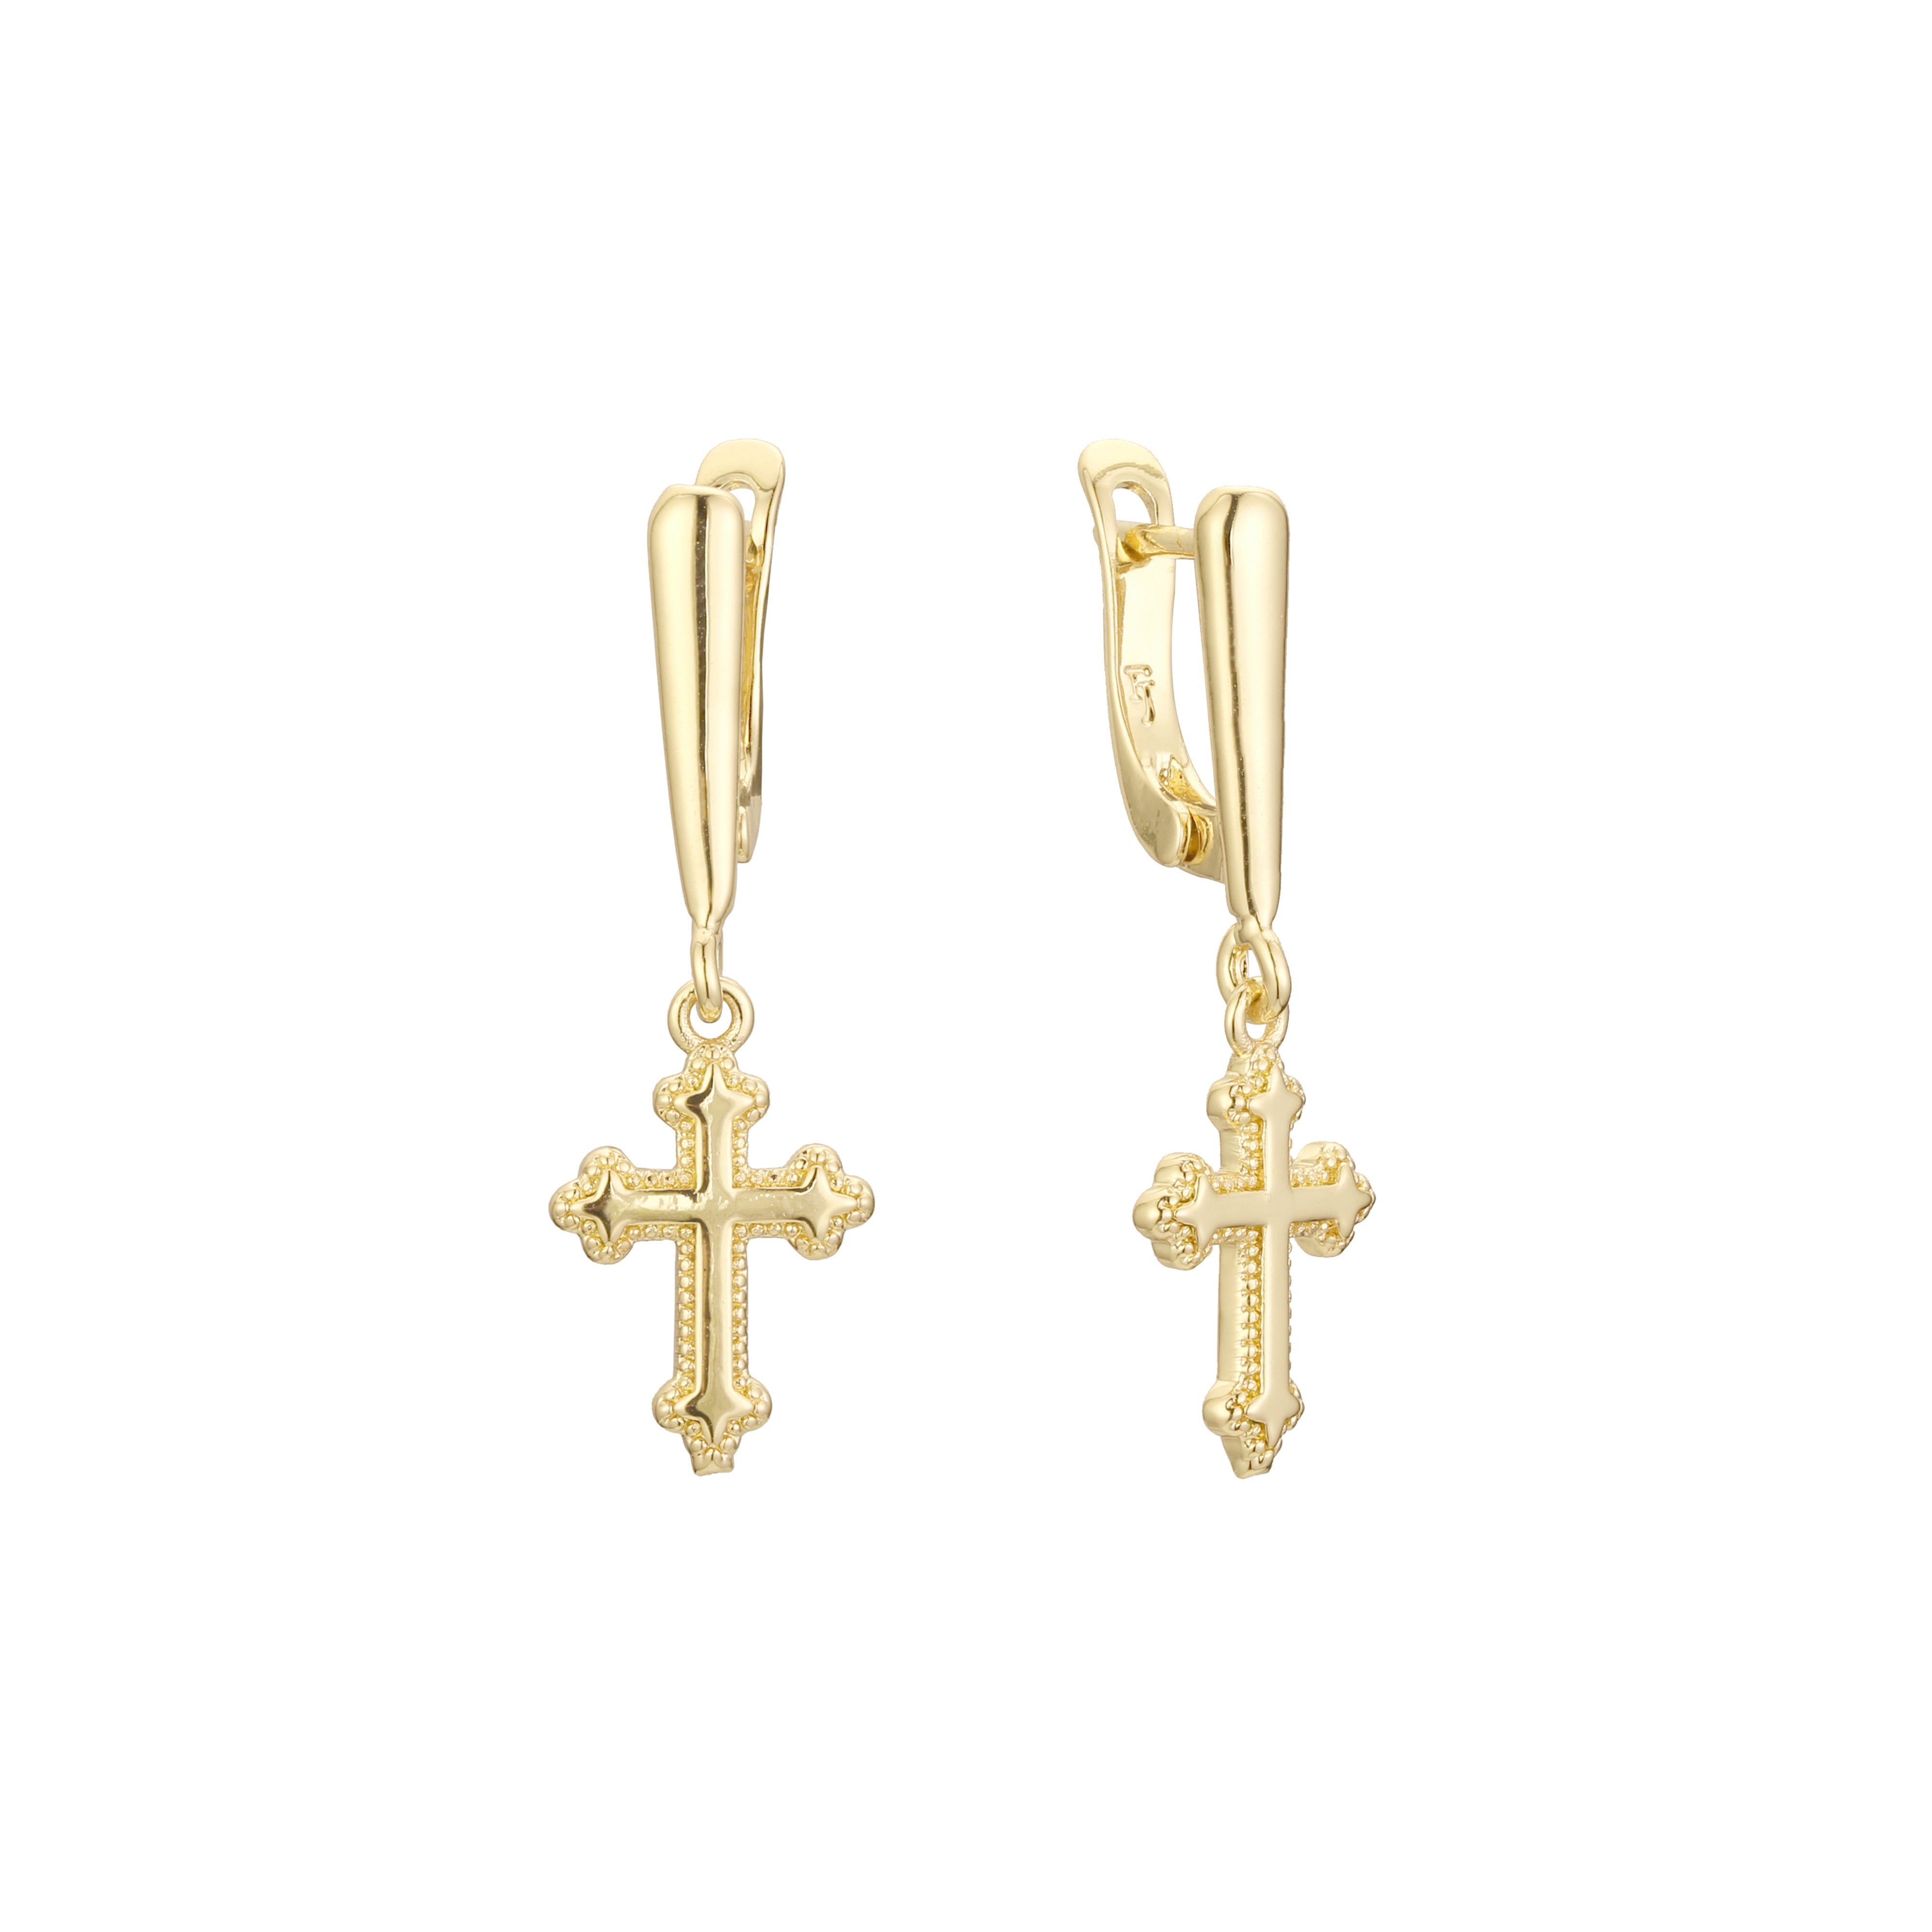 Cross earrings in 14K Gold, Rose Gold plating colors